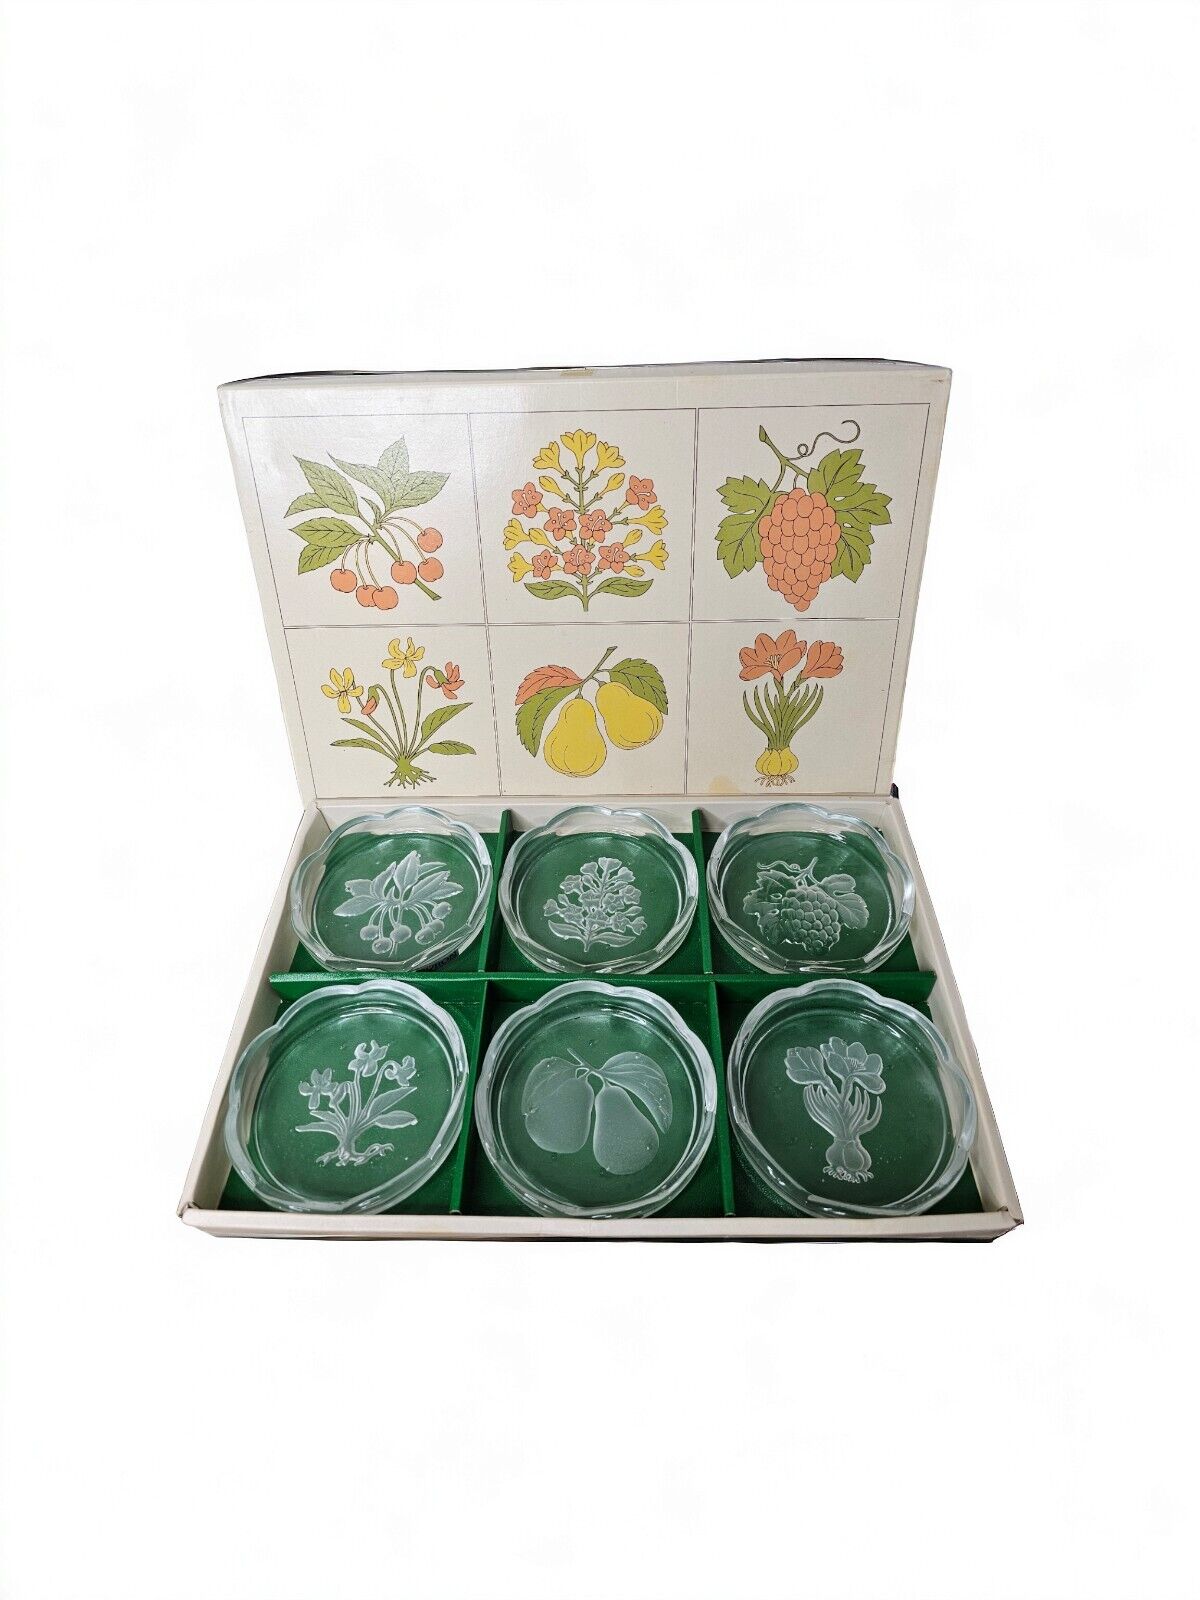 Byron Hirota Glass Co Japan Set of 6 Vintage Embossed Coasters 3.5